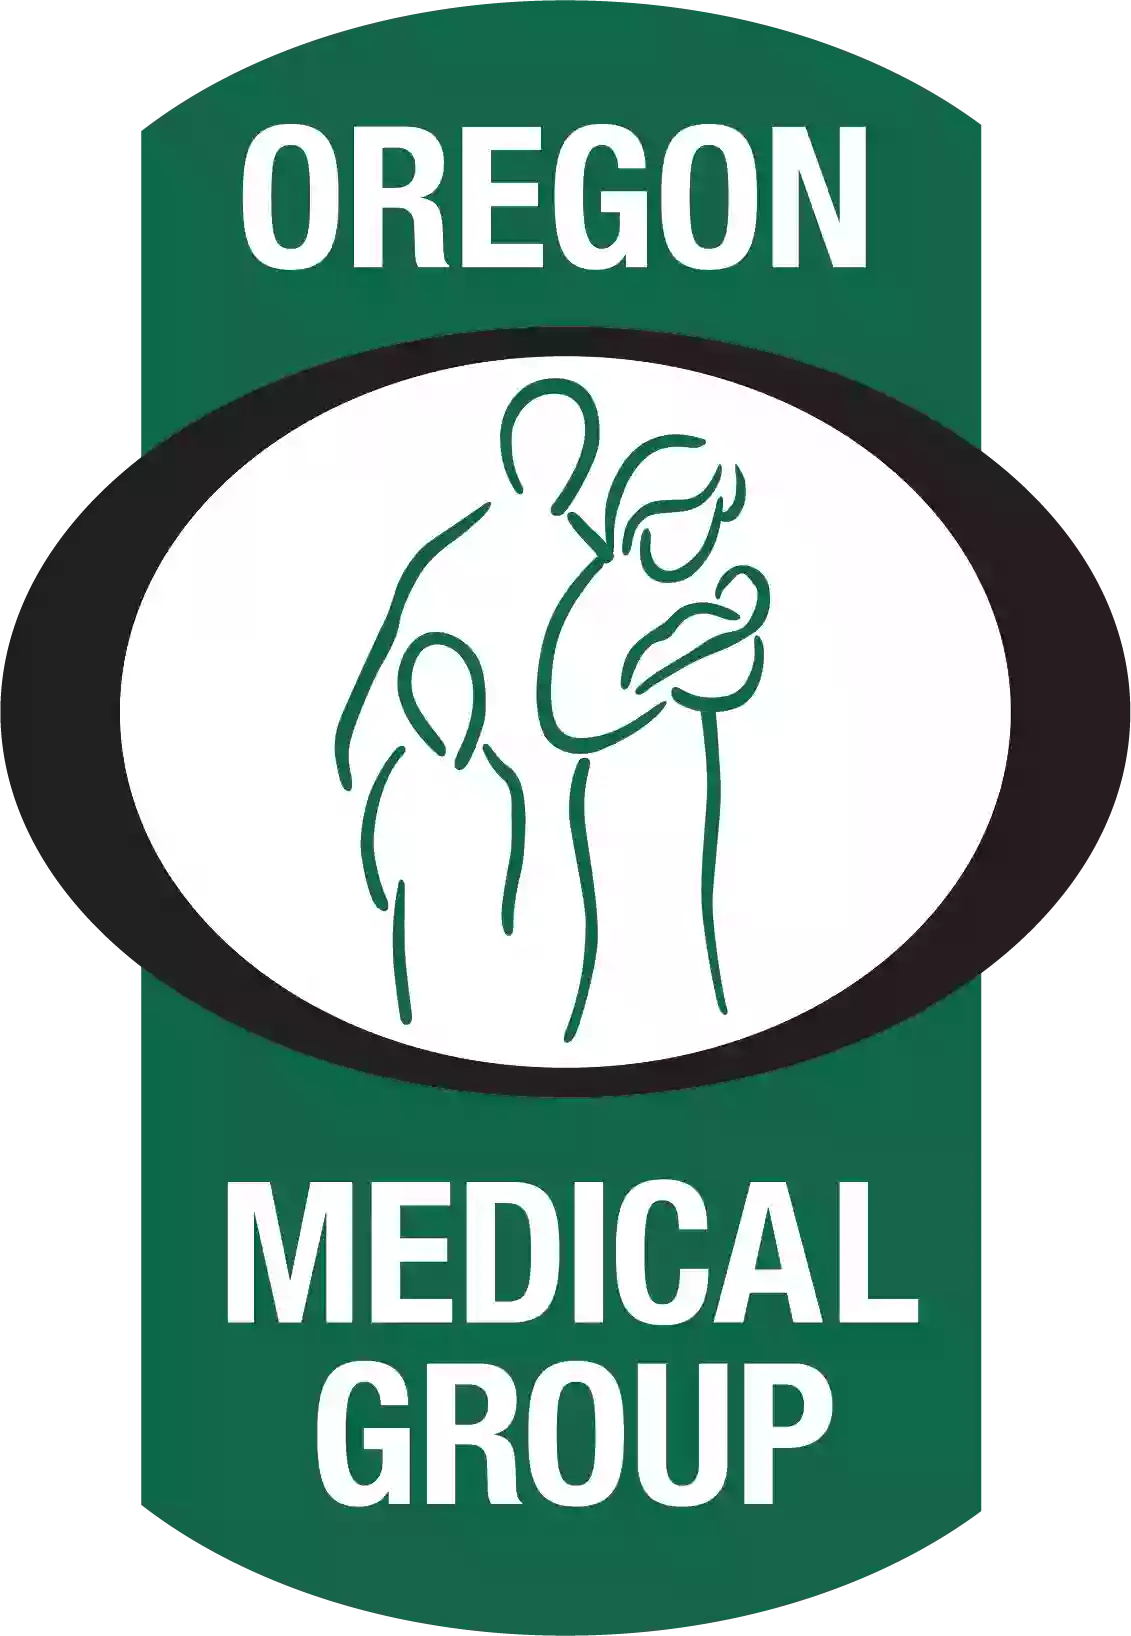 Oregon Medical Group - West Eugene Medical Clinic